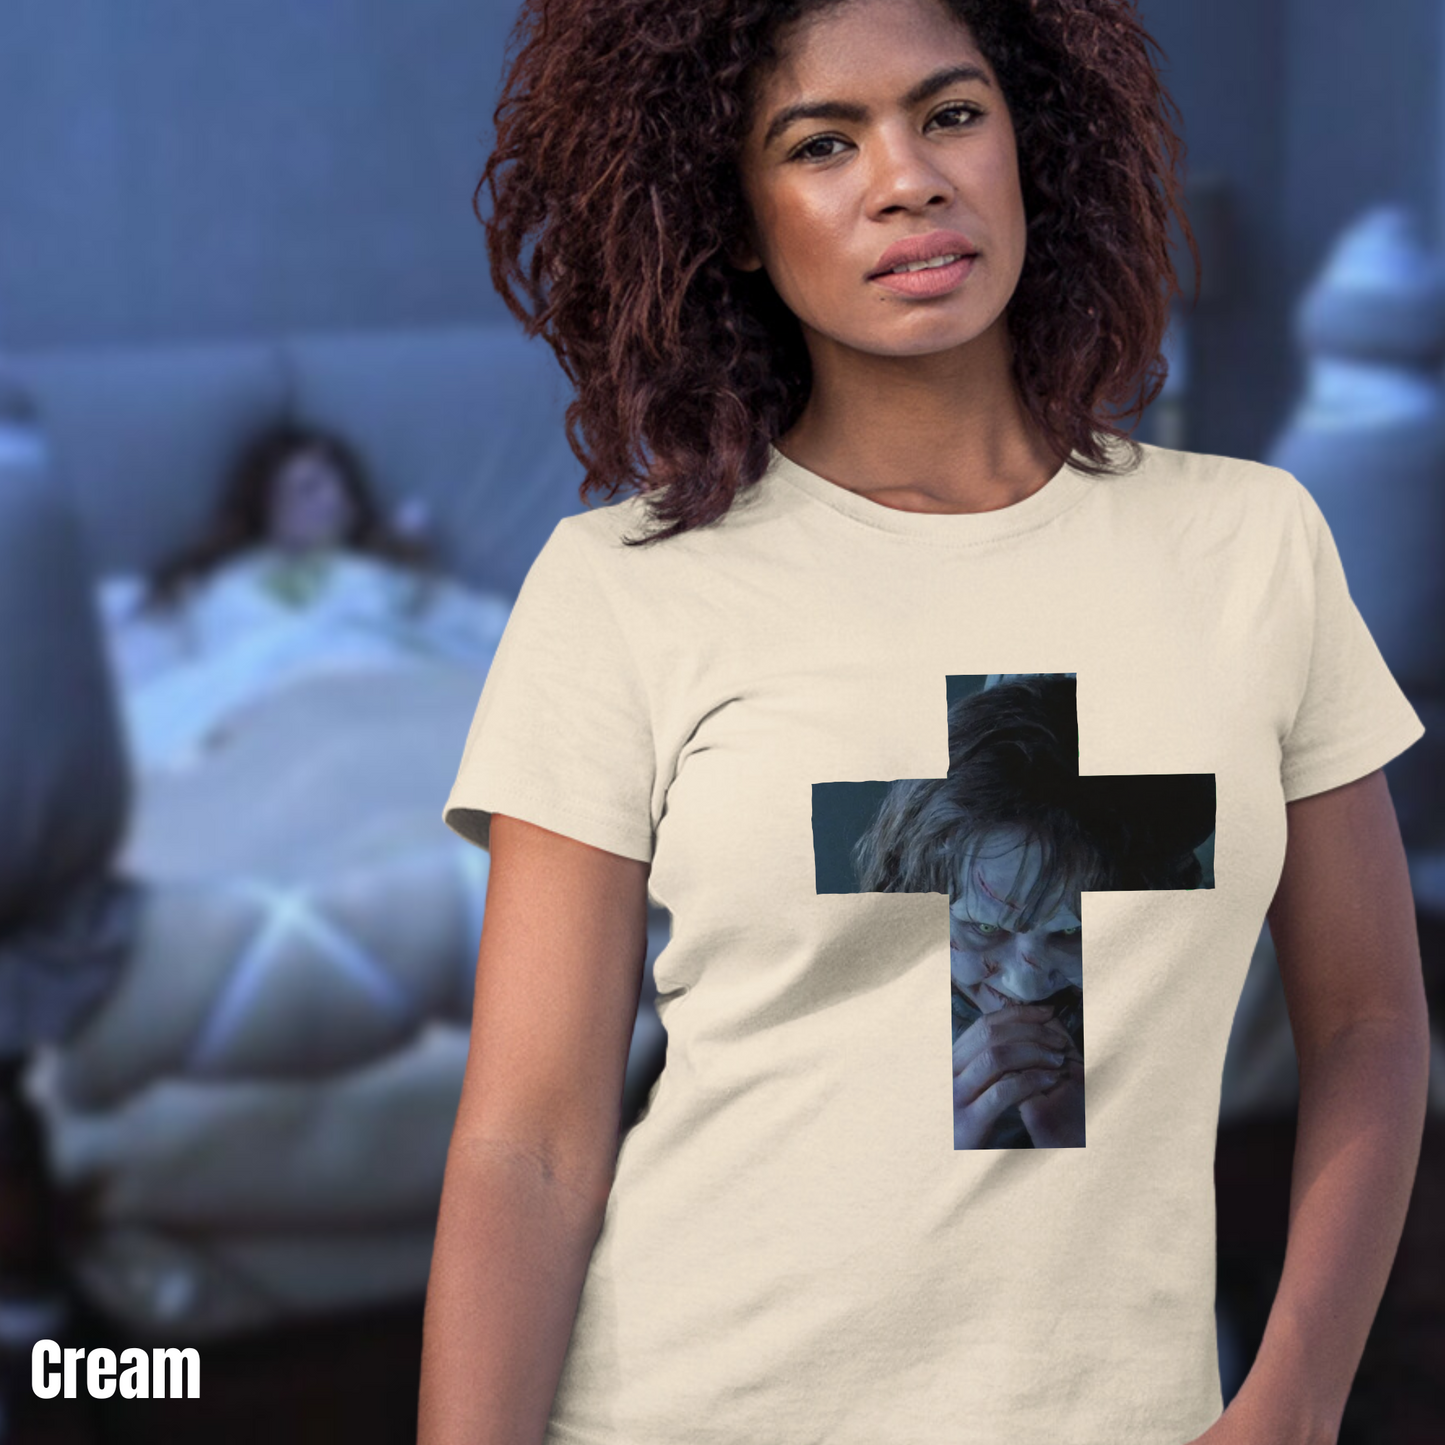 Crucifix Regan tee unisex horror tshirt for her horror fan tee gift Regan Exorcist tee for him horror graphic tee Exorcist movie tshirt